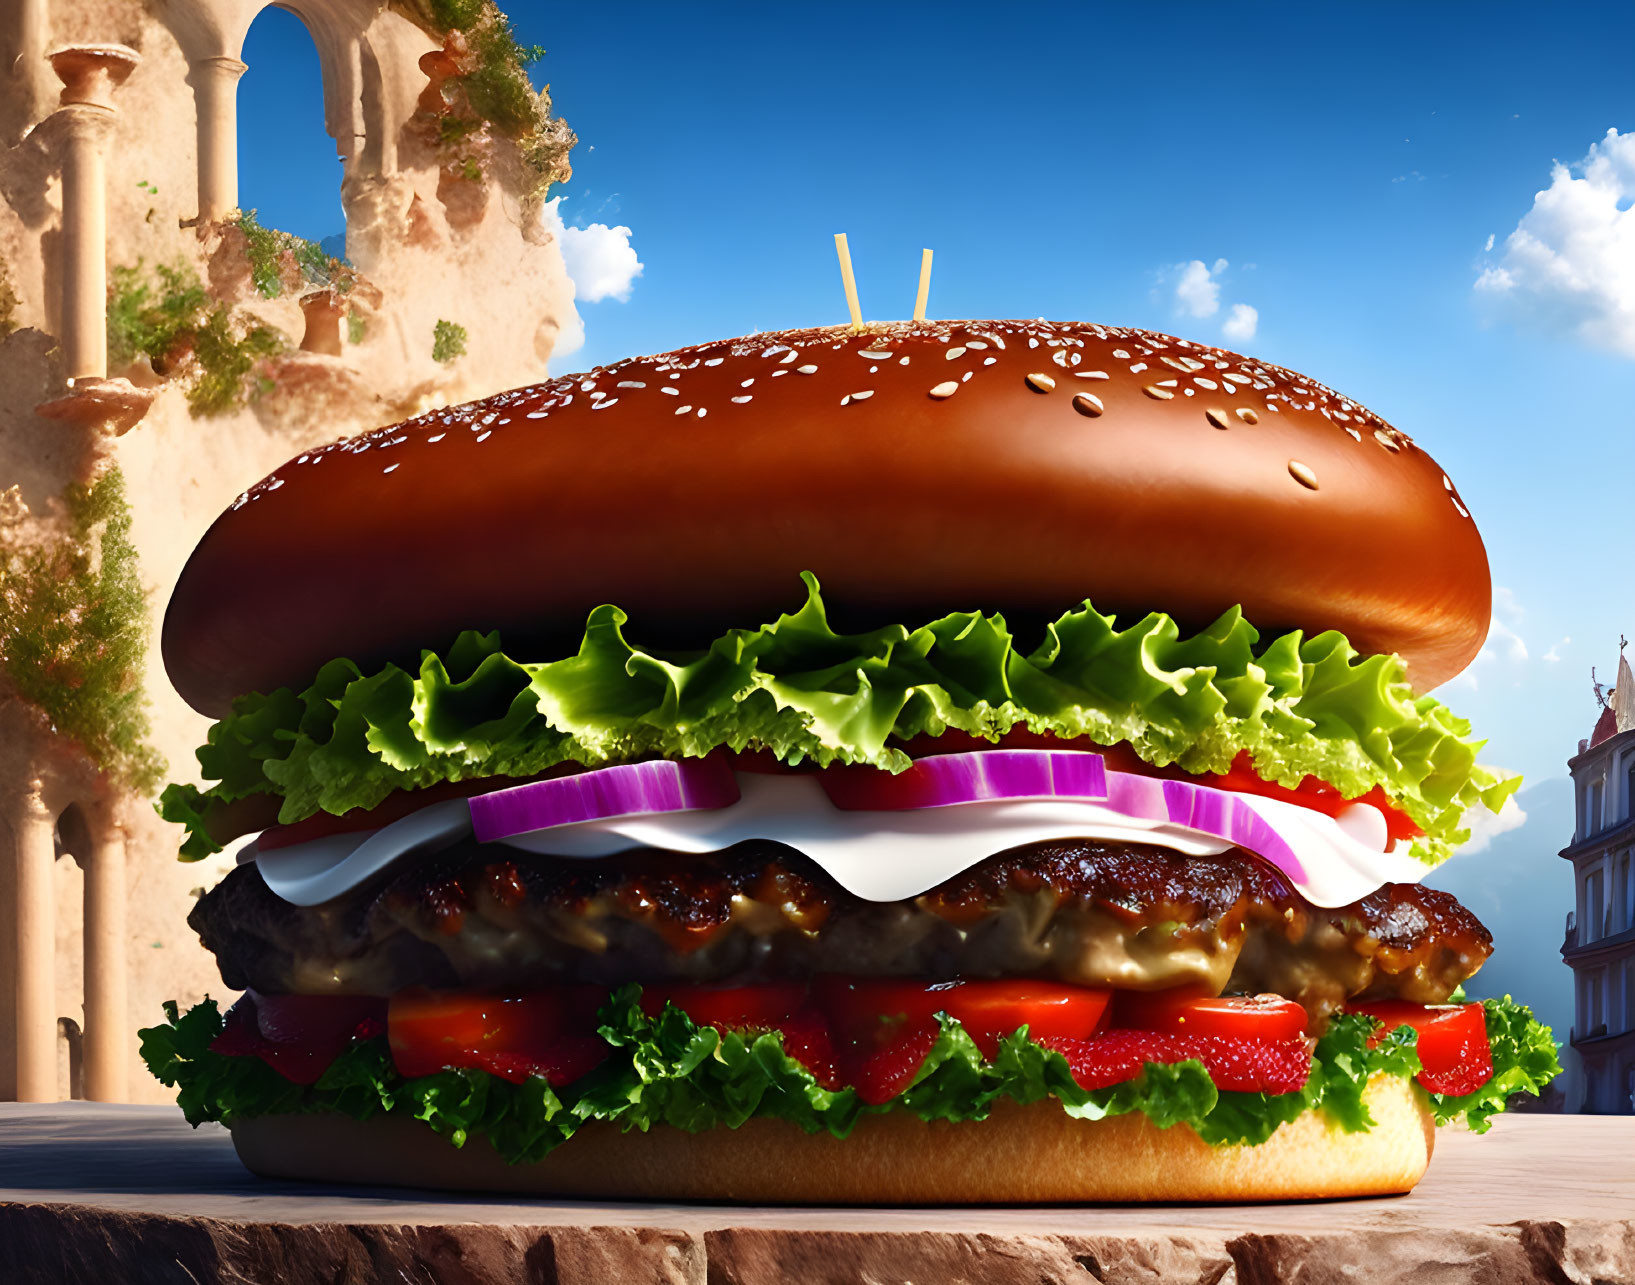 The burg burger